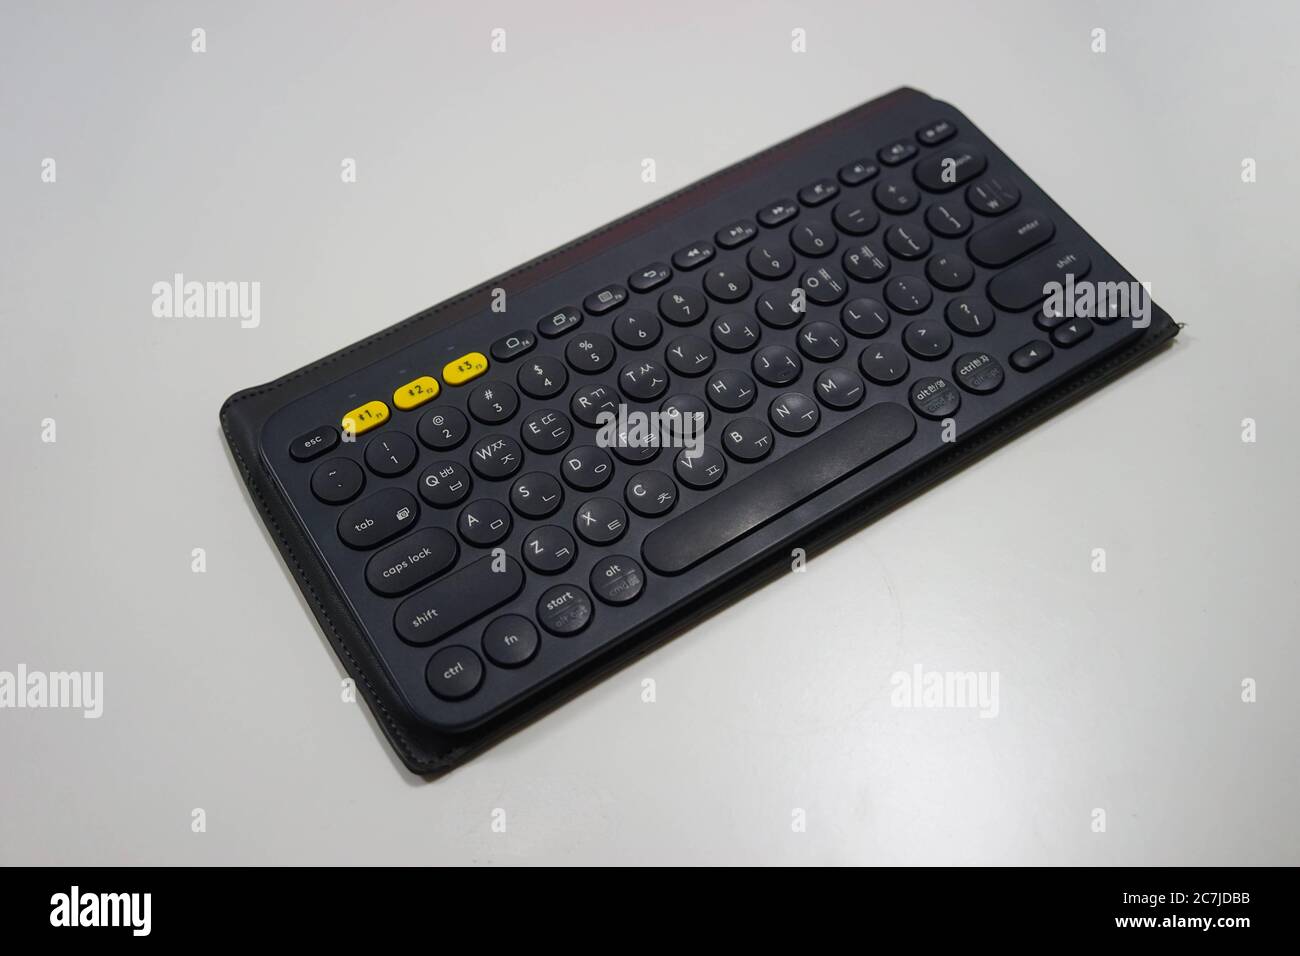 Black computer keyboard on white background Stock Photo